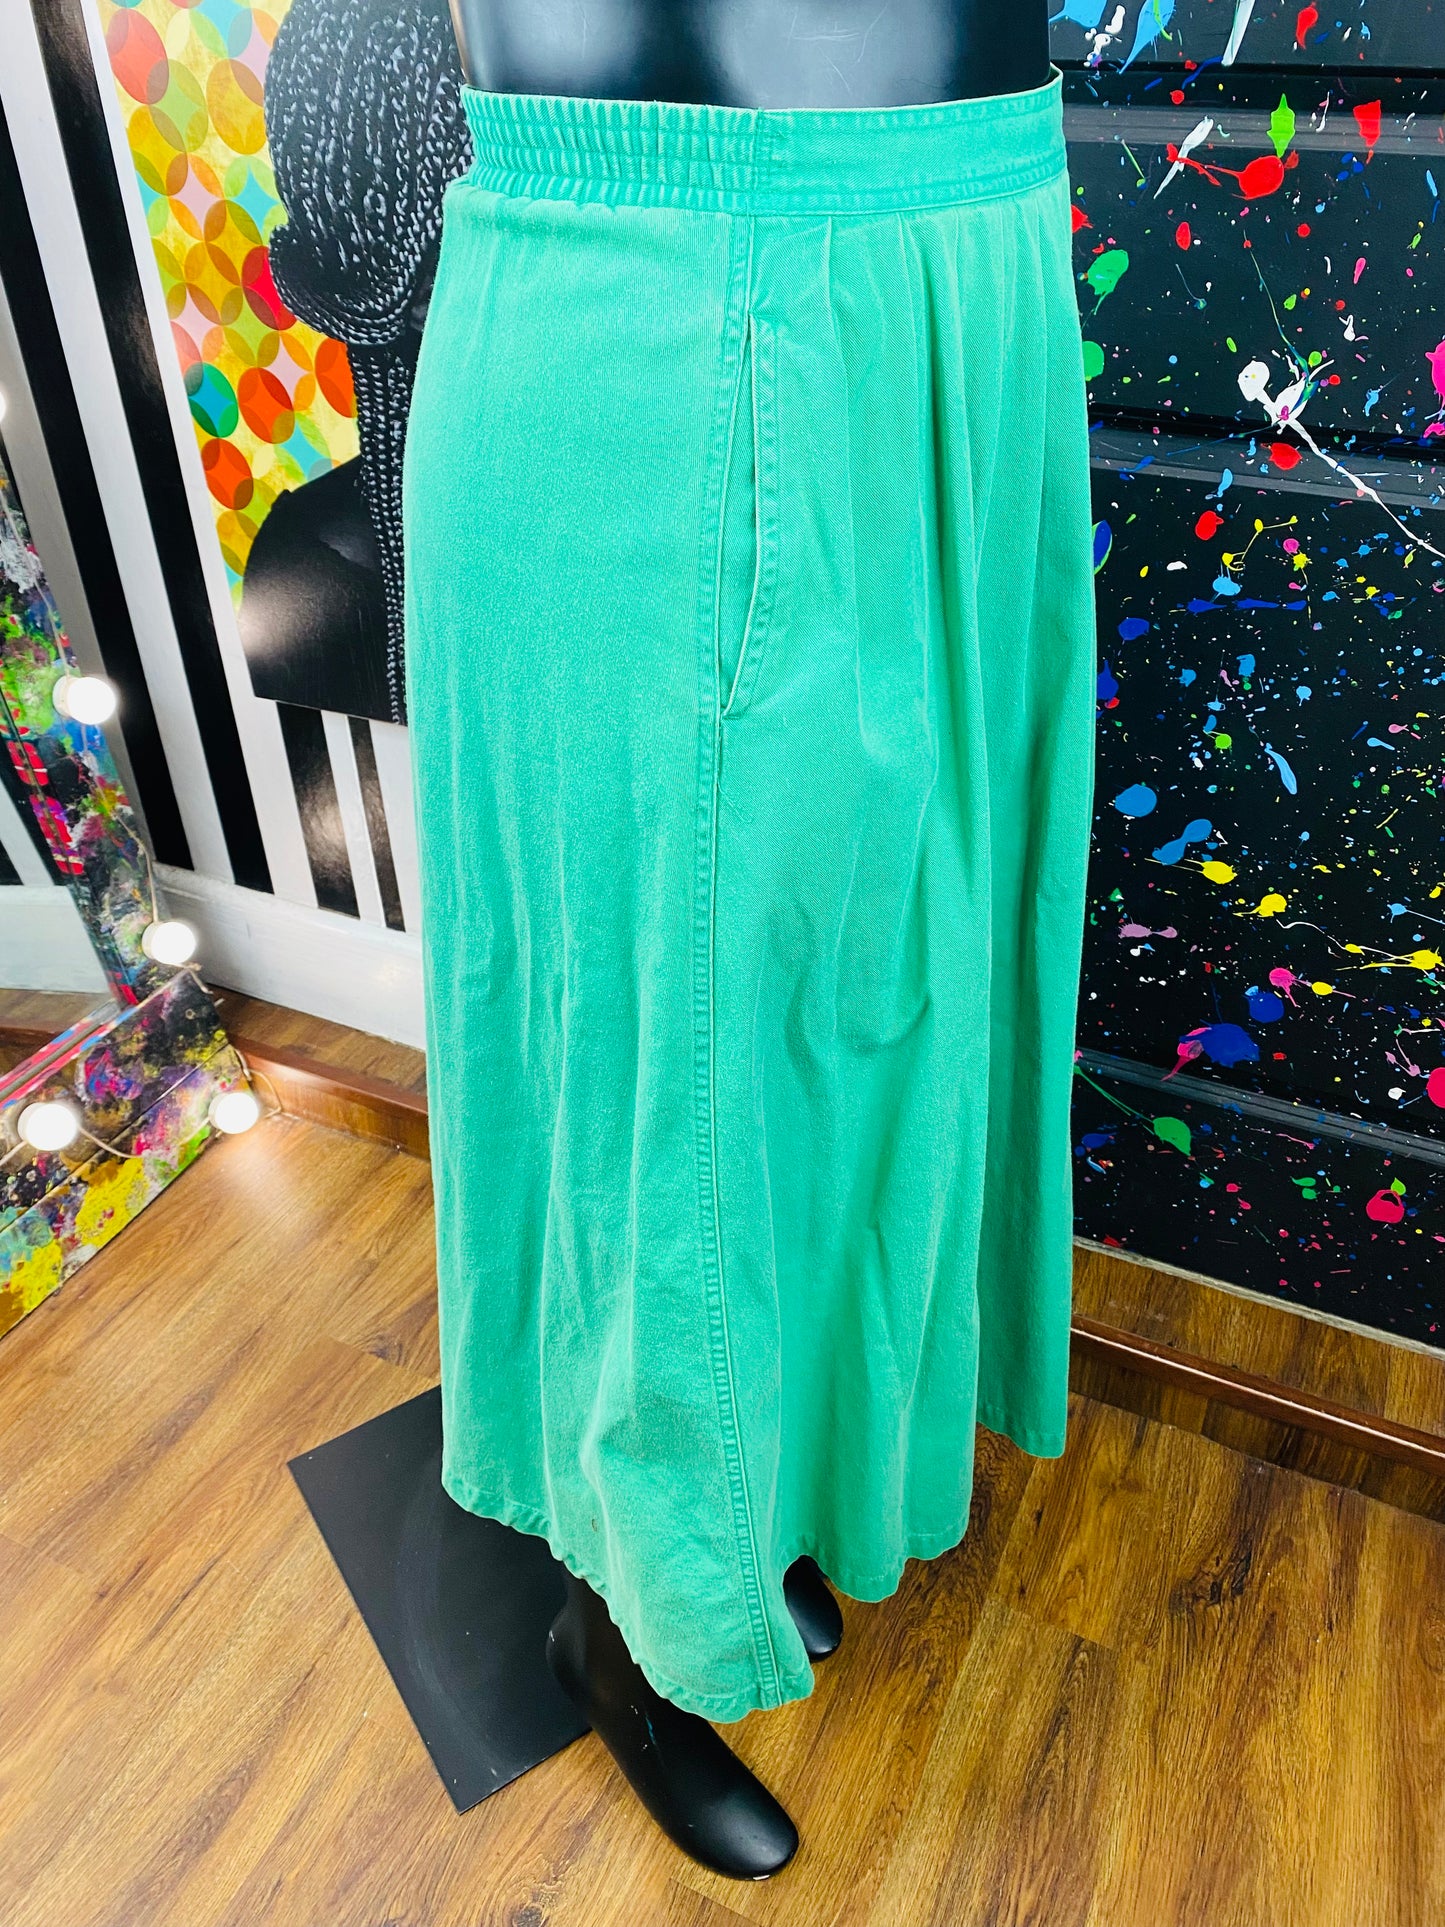 Vintage Green Denim Skirt